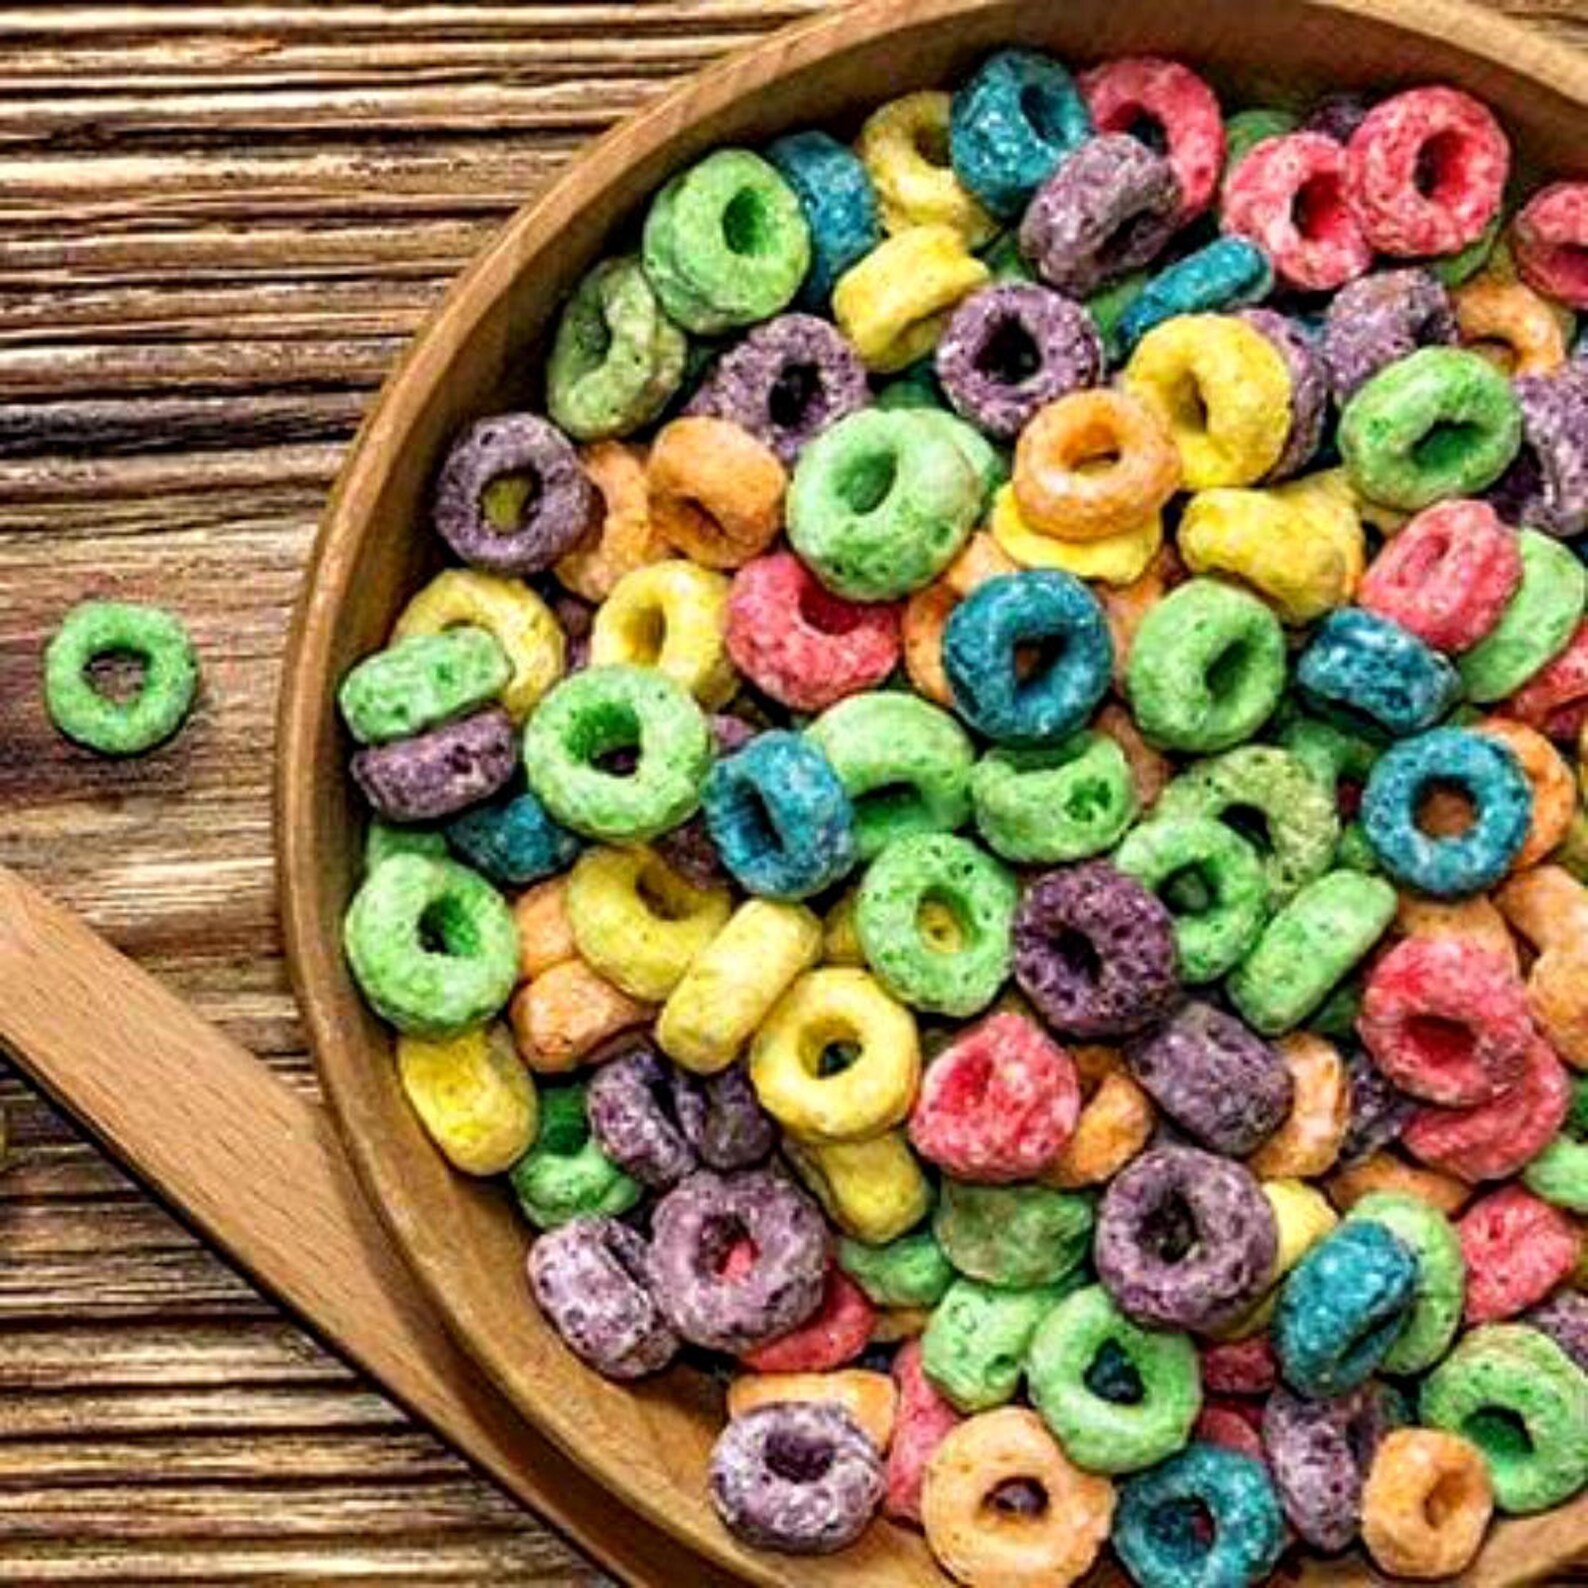 Froot loops. Froot loops Cereal. Разноцветный сухой завтрак. Fruity loops завтрак. Fruity loops Колечки.